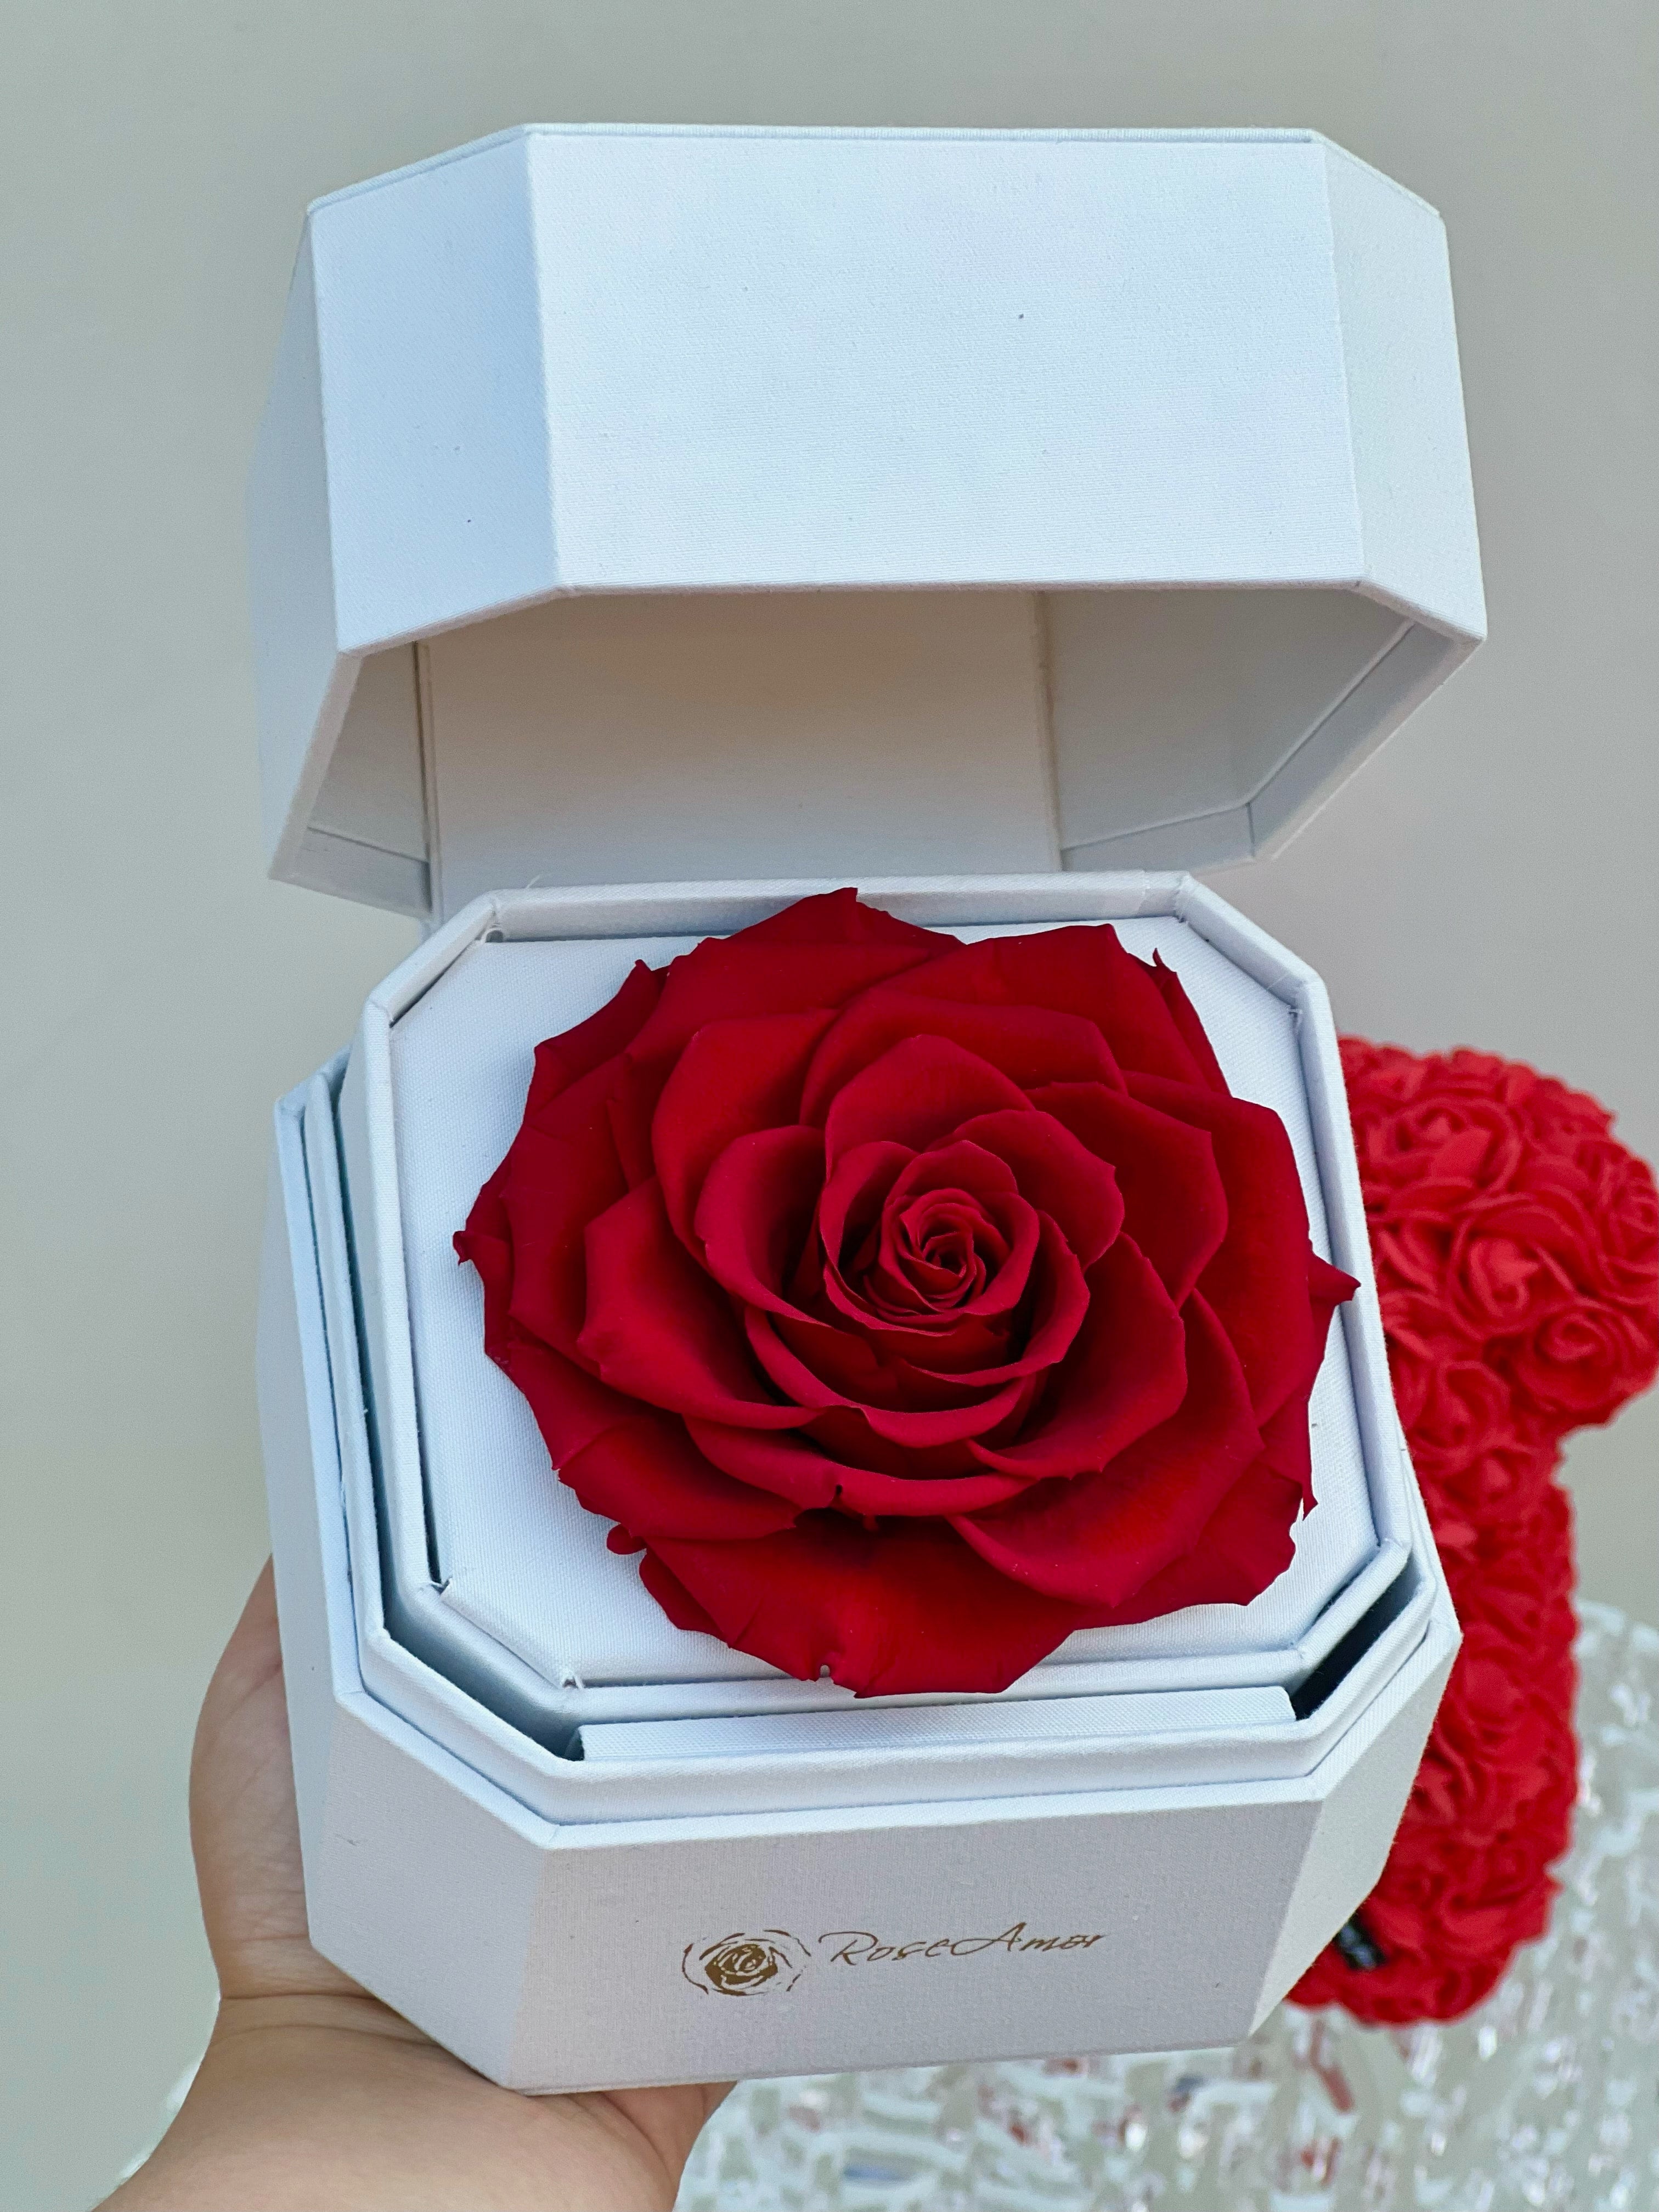 Forever Rose | Long-Lasting Preserved Roses | Real Roses that Last Forever